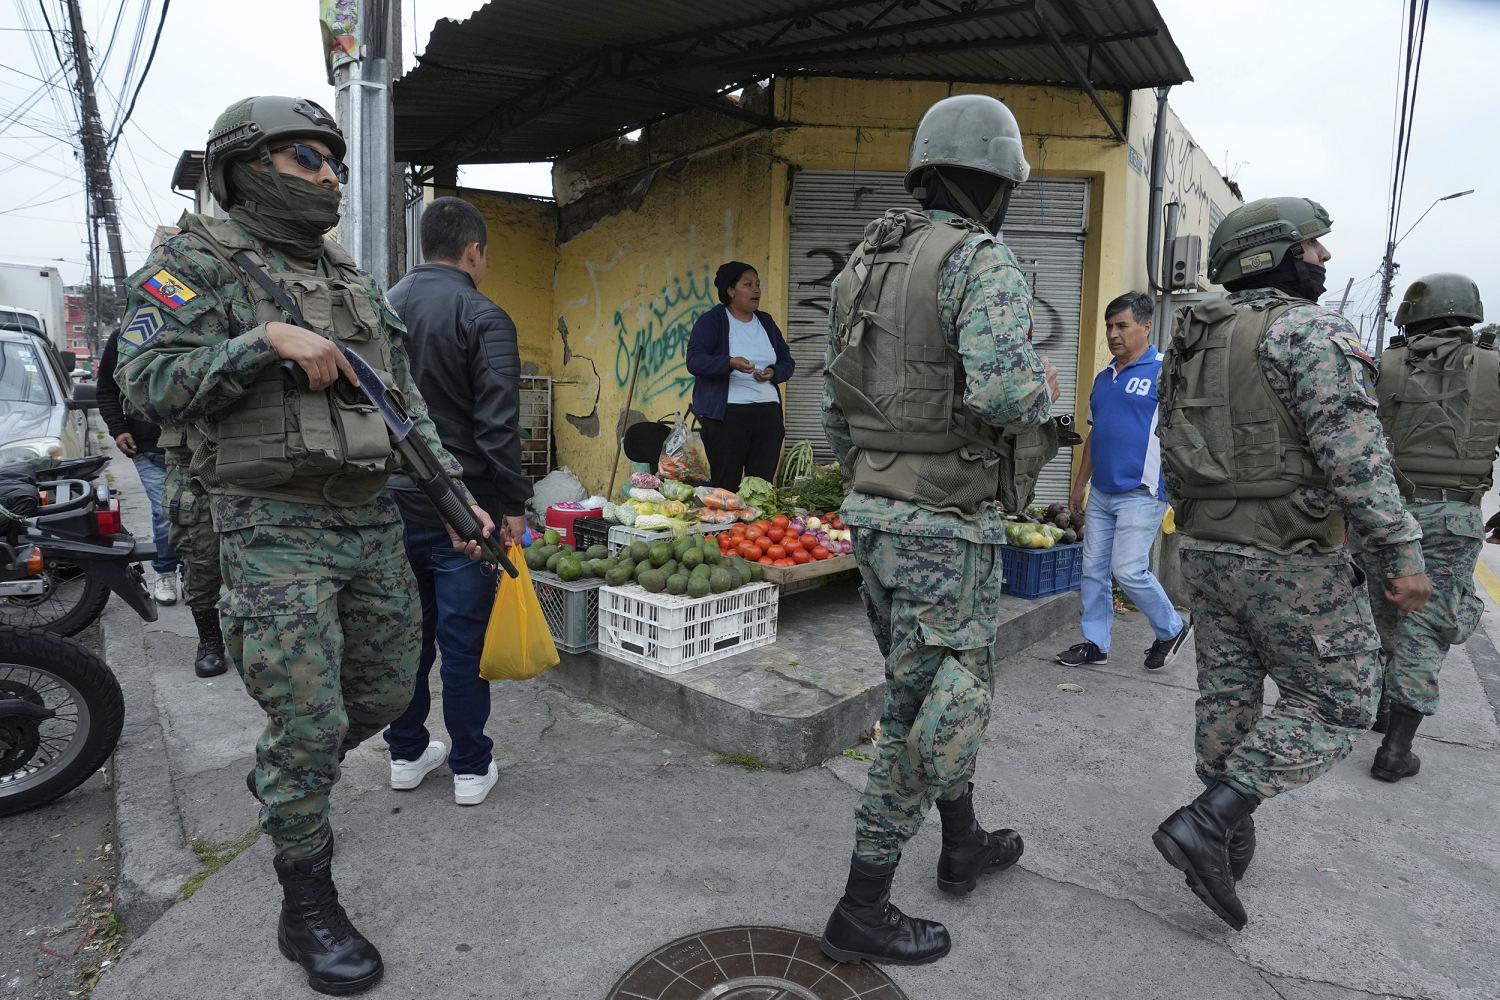 In Ecuador armed men break into live TV,  country rocked by attacks 